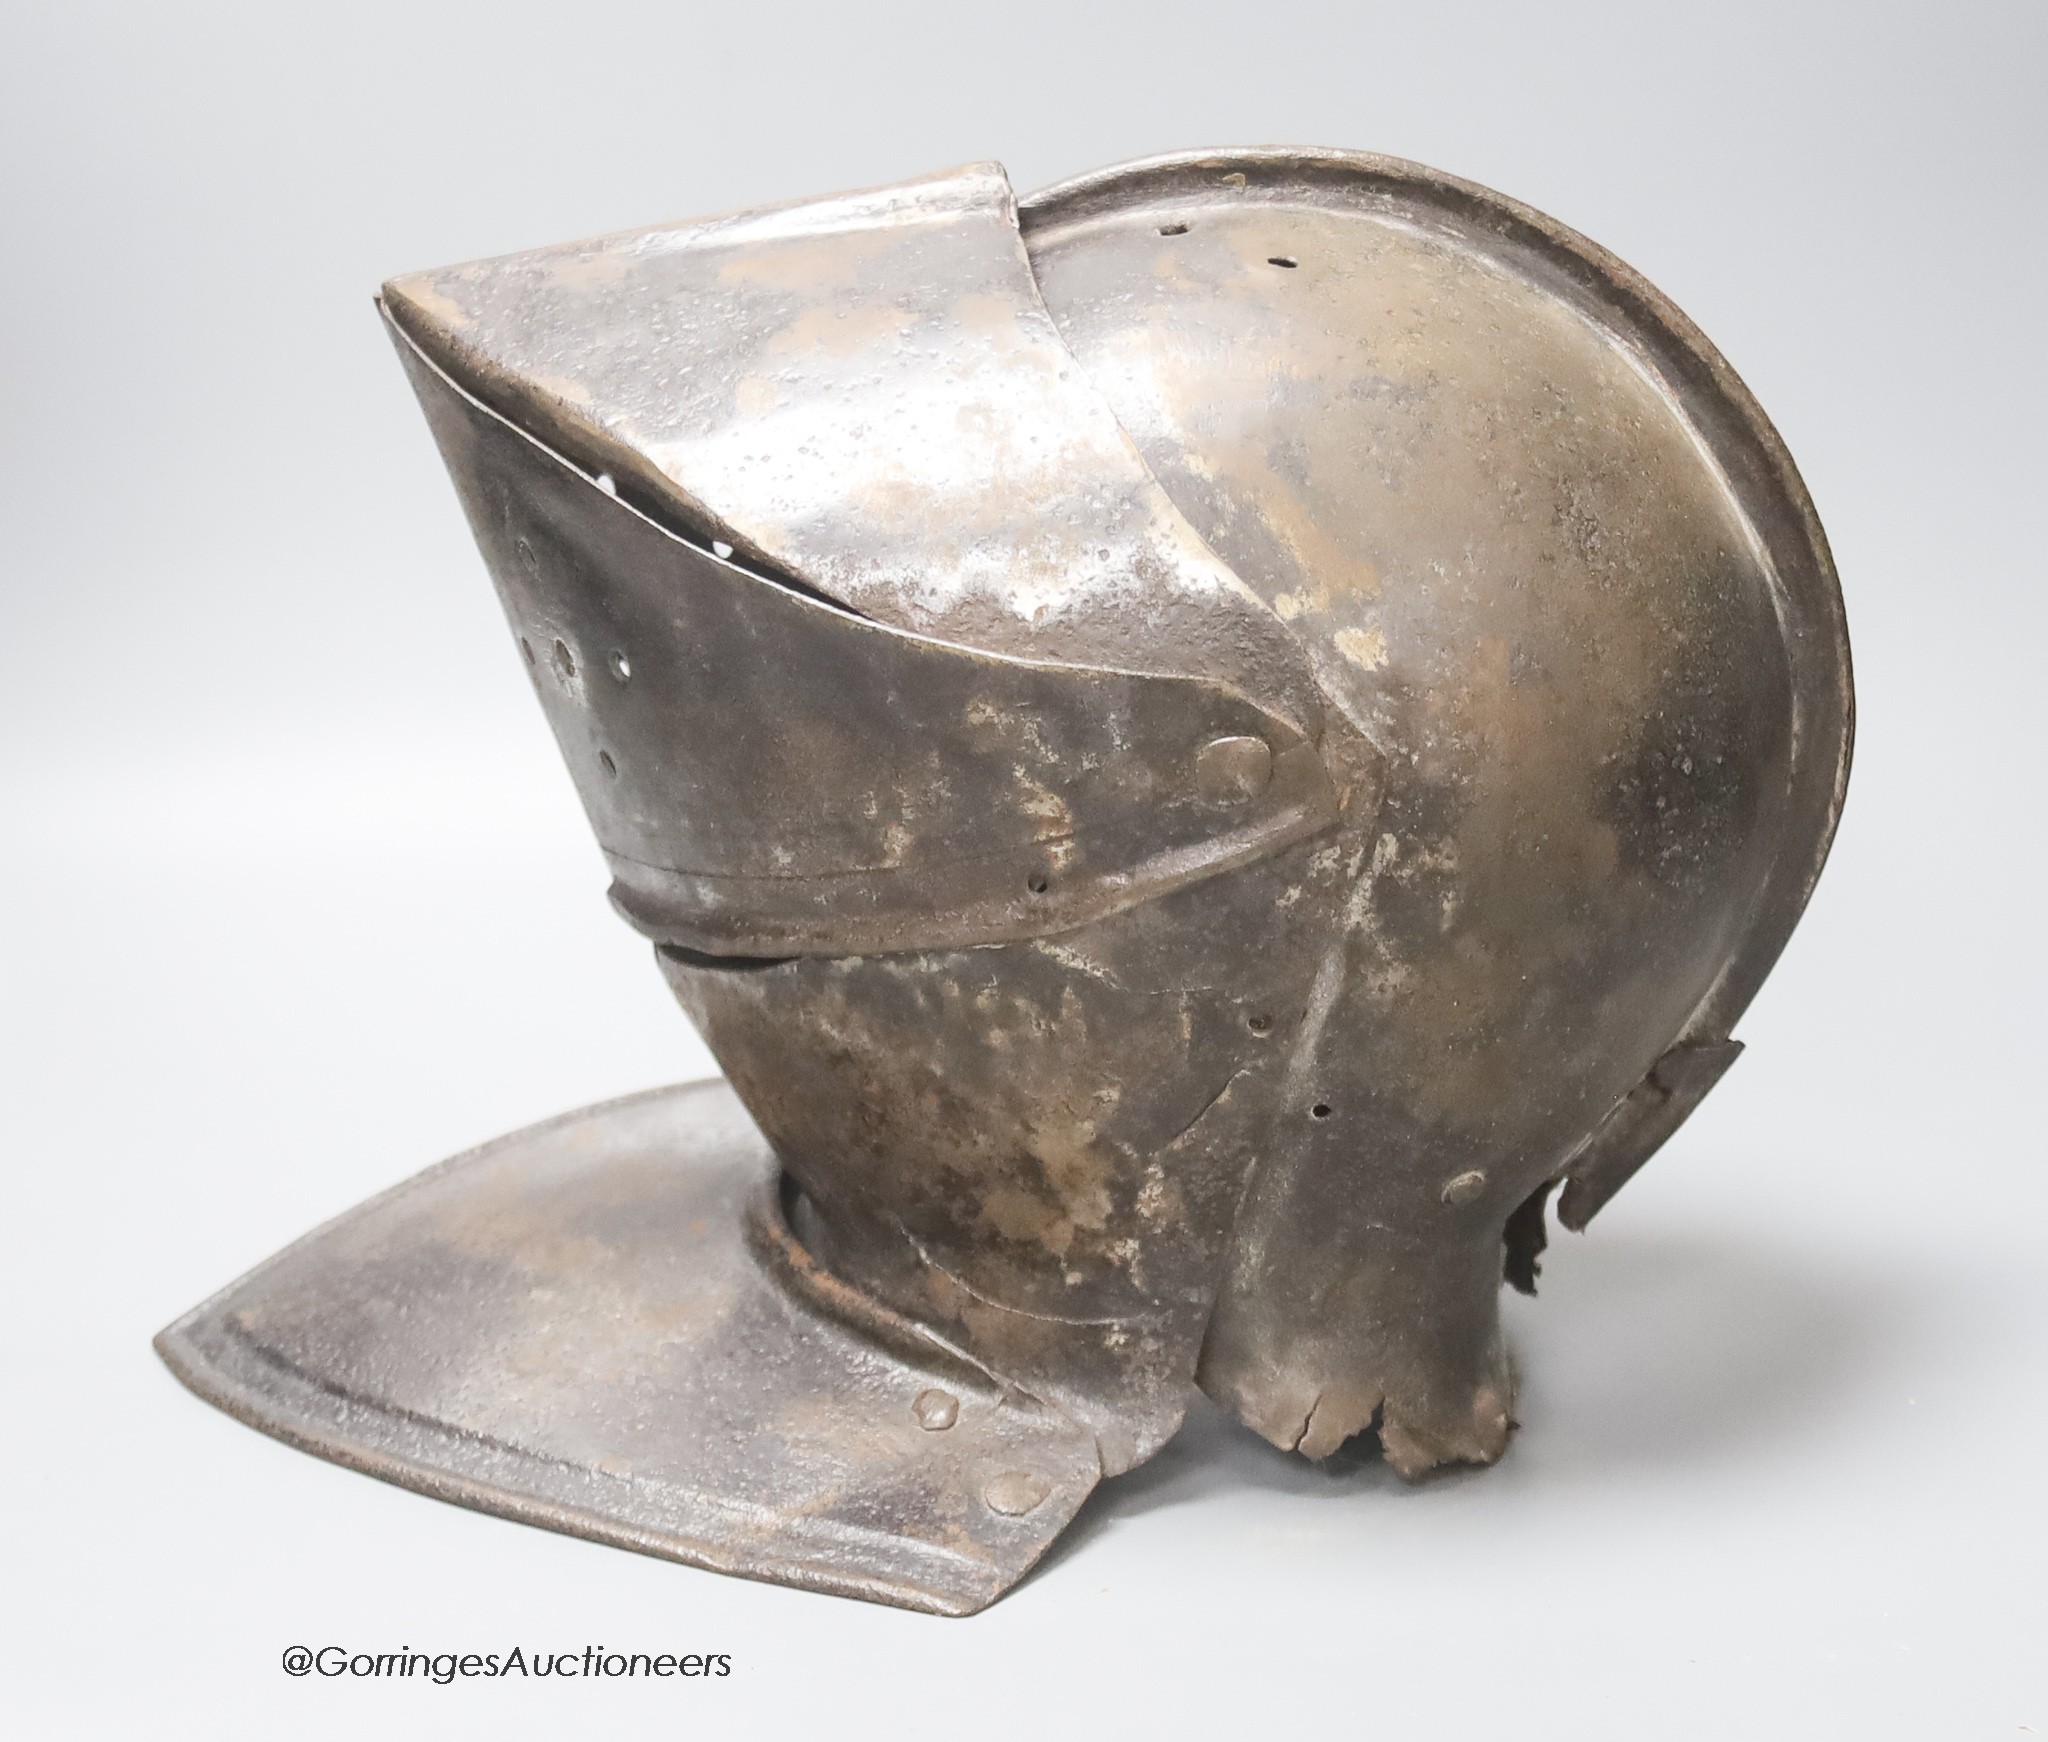 A 17th century iron close helmet, height 28cm approx.